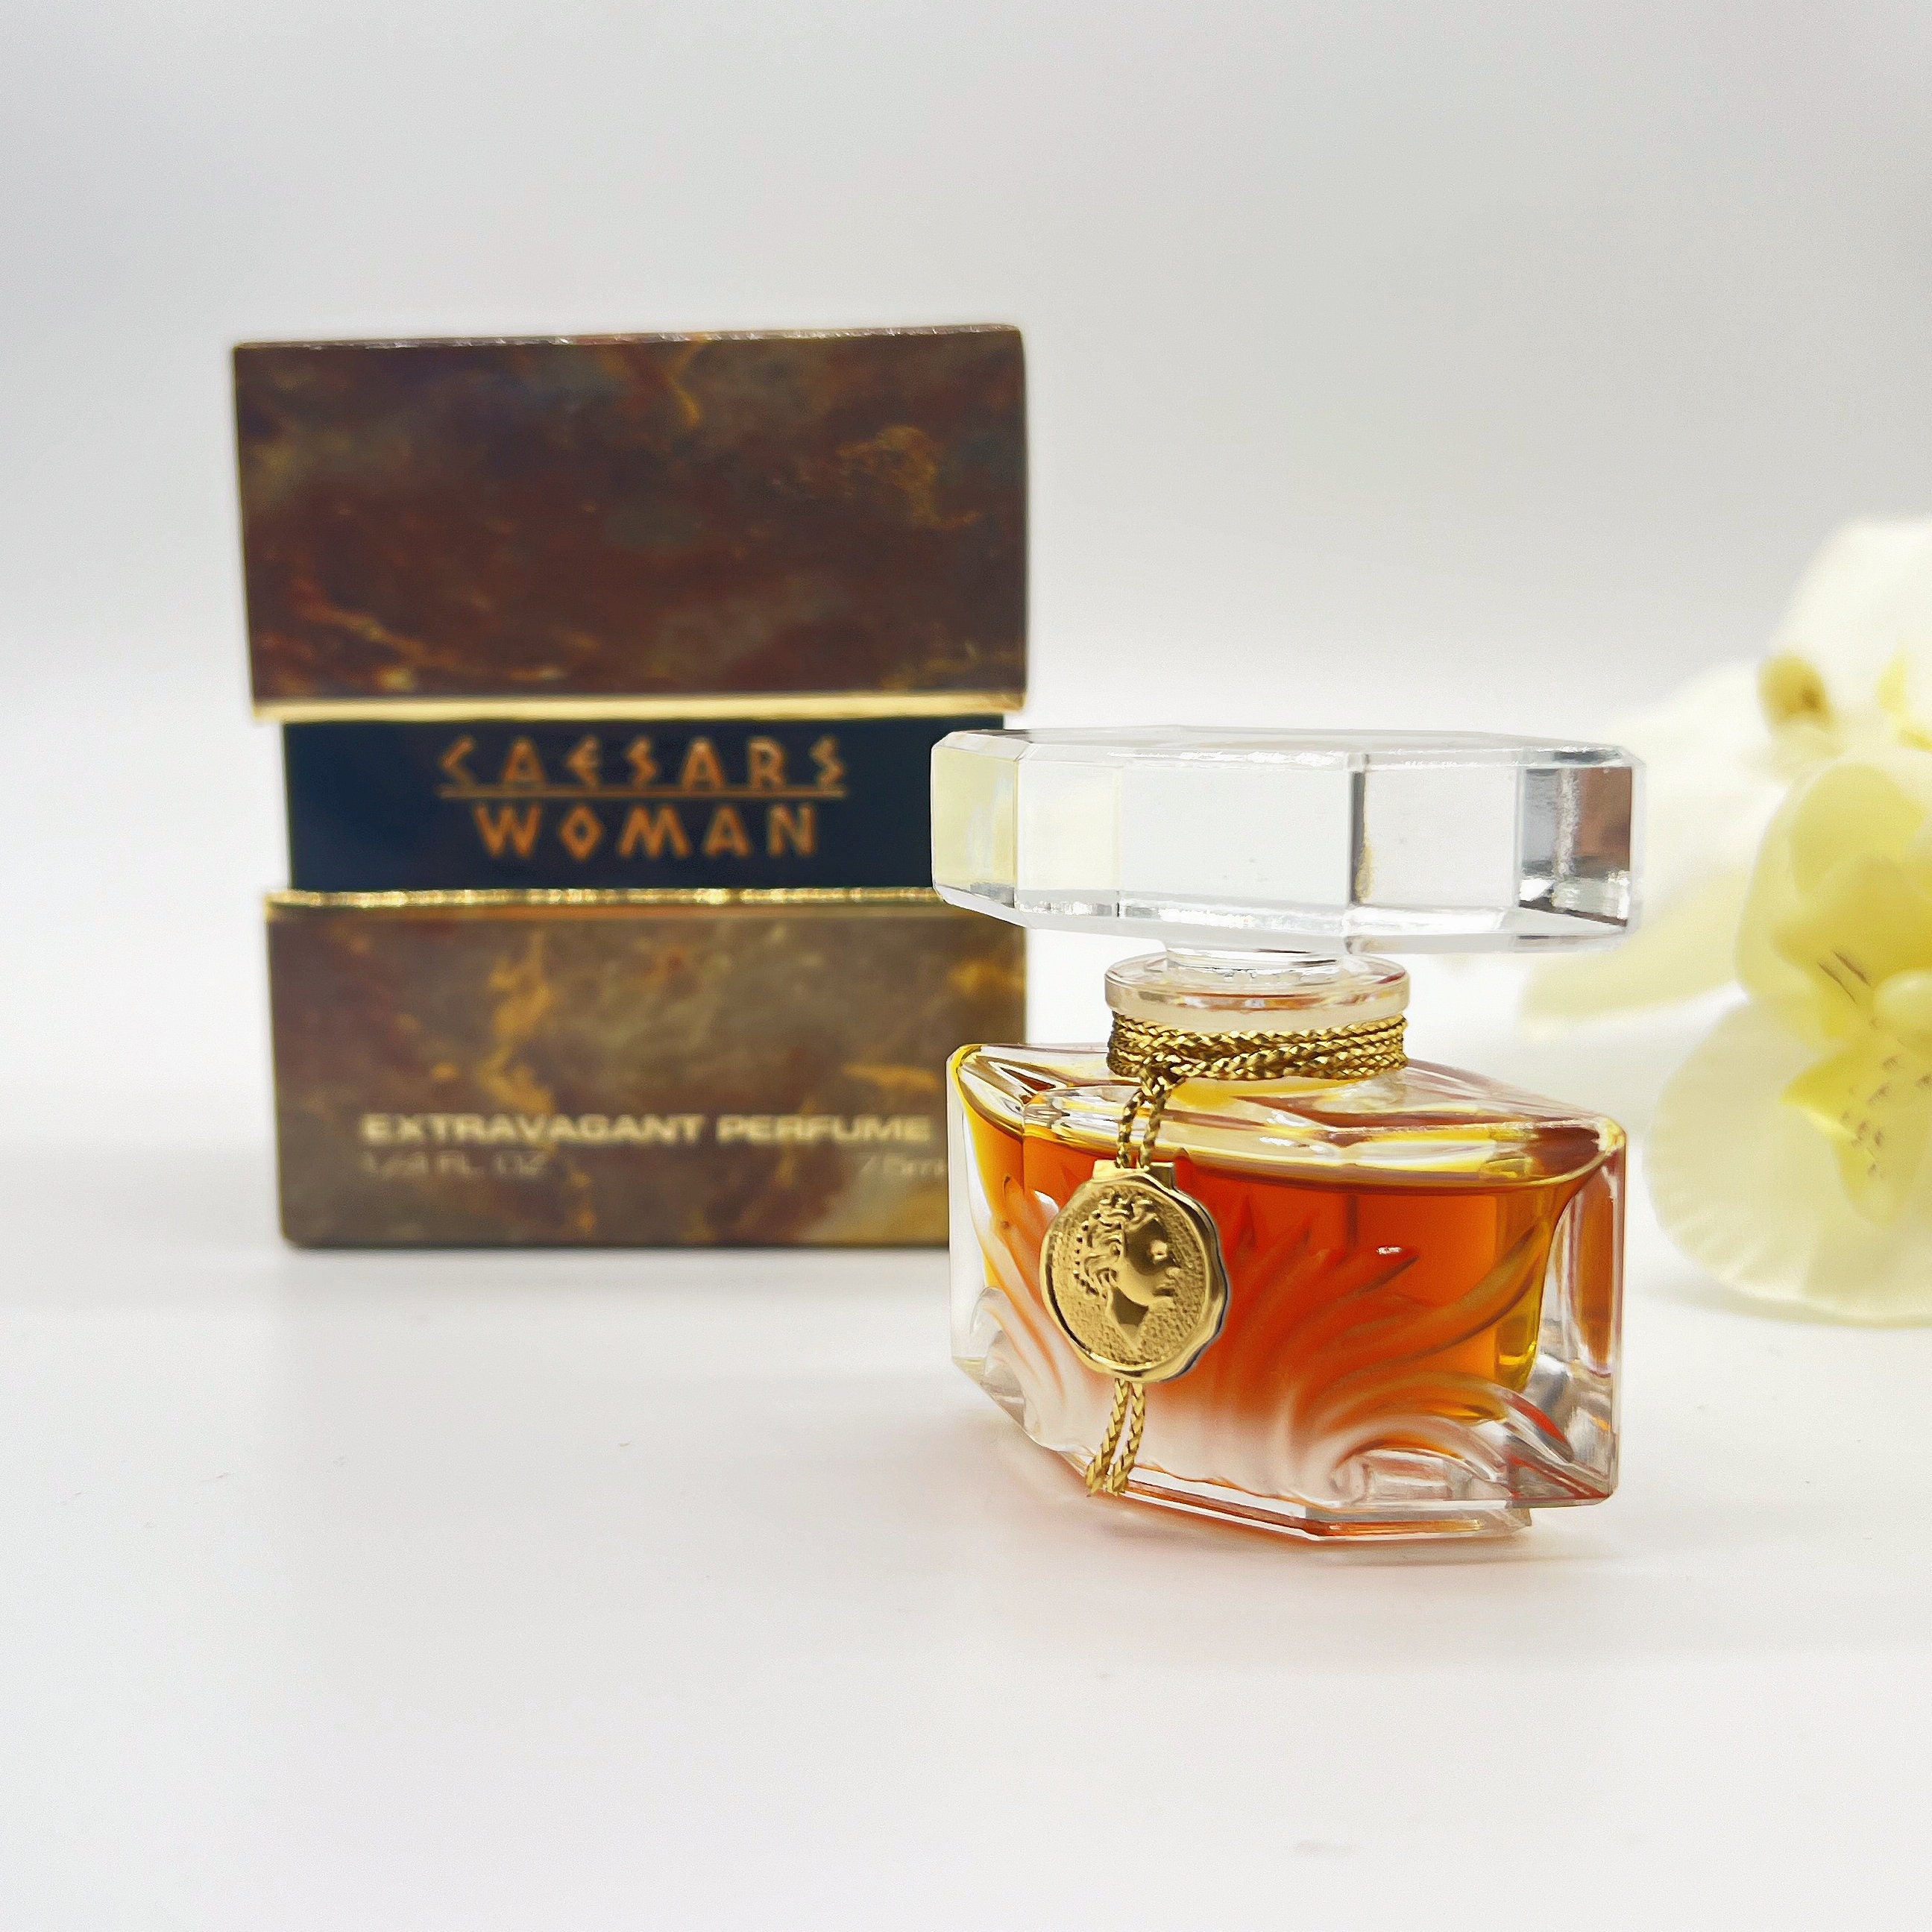 Caesars Woman1988 Parfum/extrait 7,5 Ml/0,25 Fl.oz. Rare Vintage 